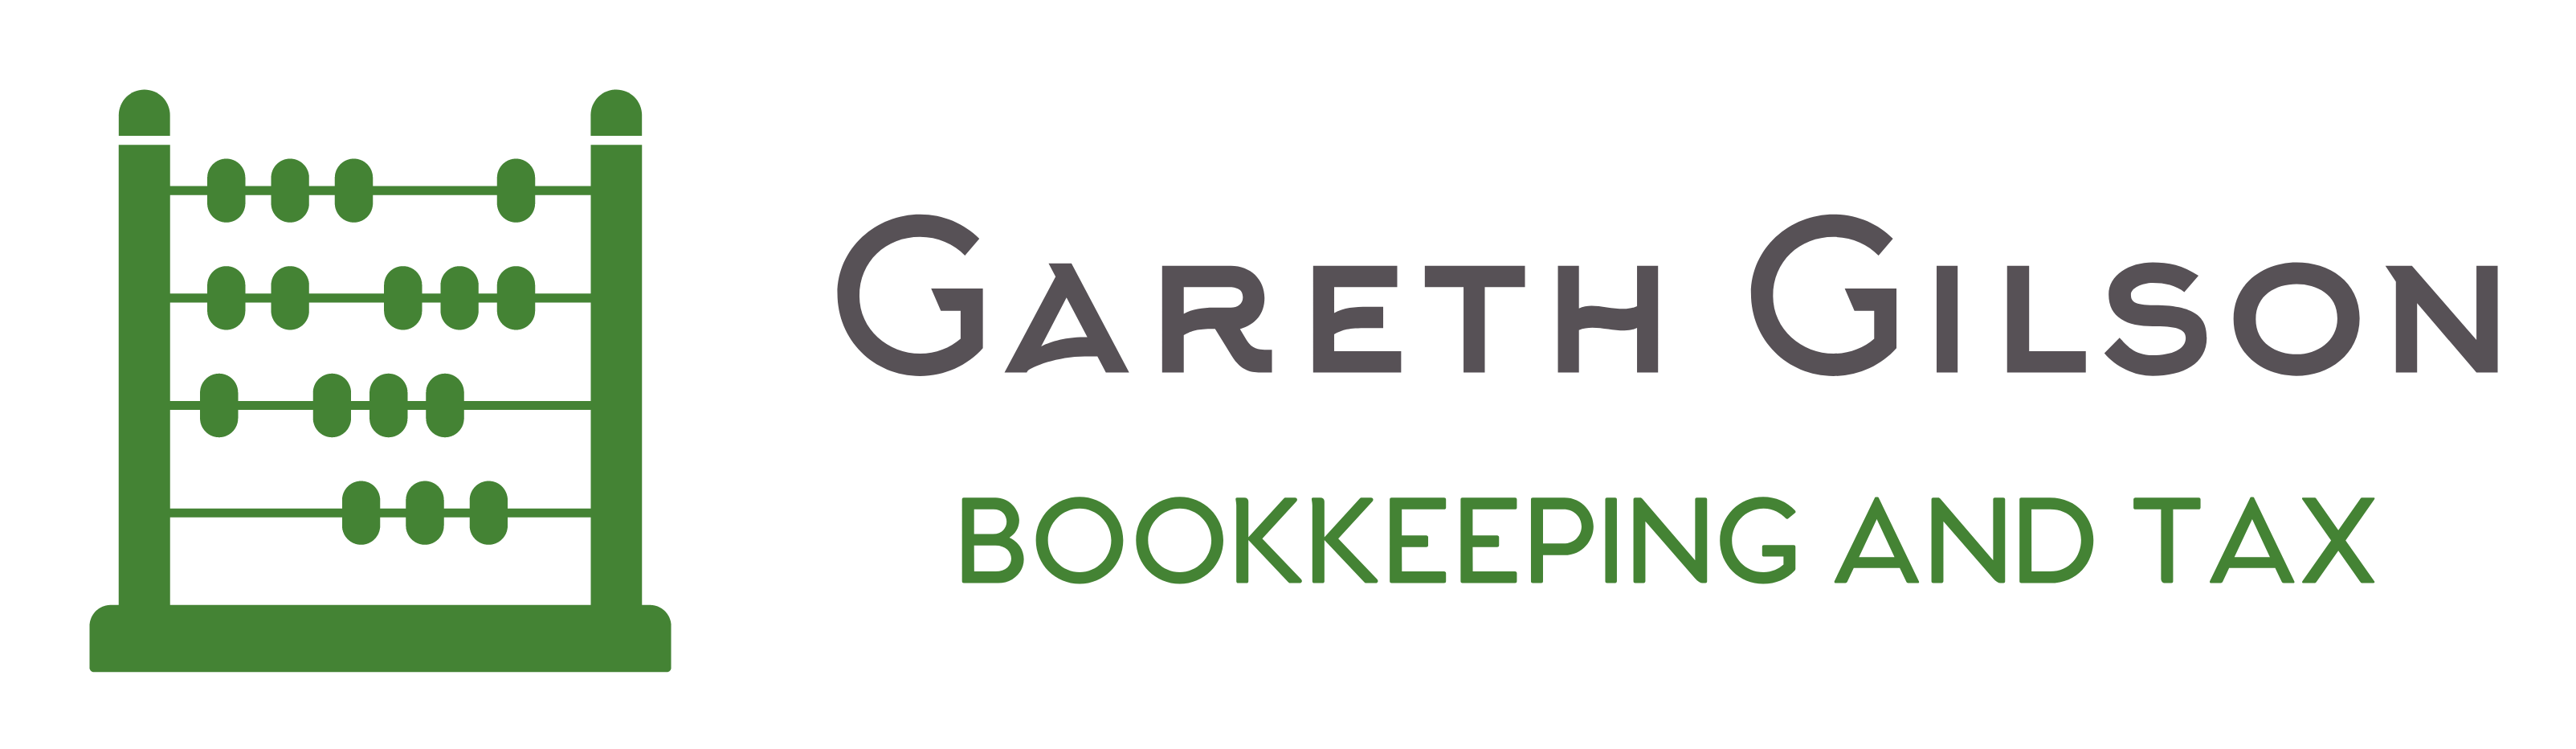 Gareth Gilson Bookkeeping